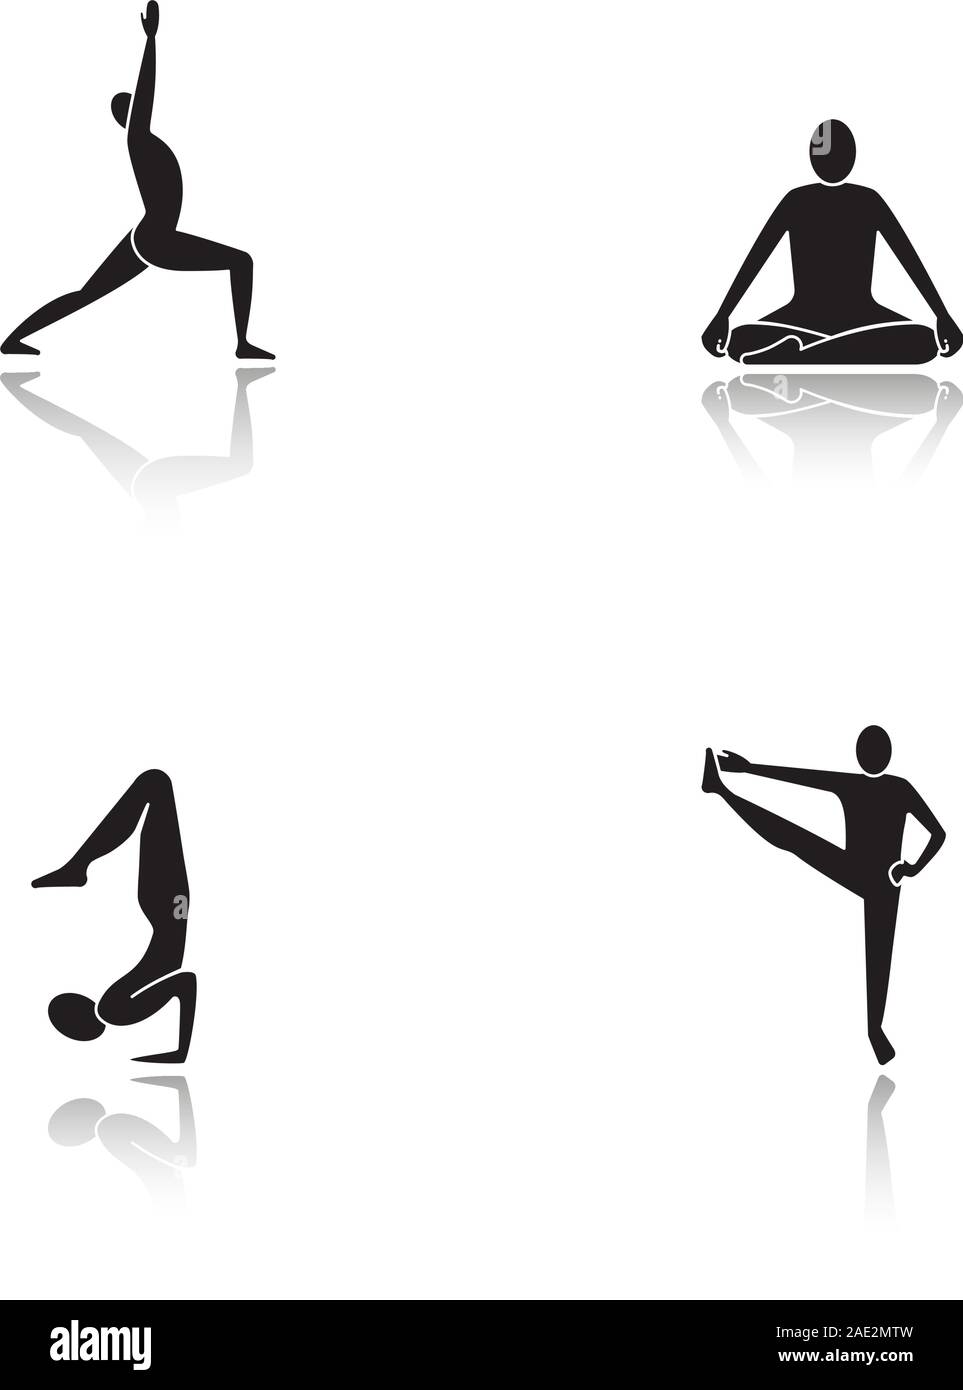 Les asanas de yoga noir ombre portée icons set. Virabhadrasana, siddhasana, vrishchikasana, utthita hasta padangusthasana les positions de yoga. Mauvais vecteur isolé Illustration de Vecteur